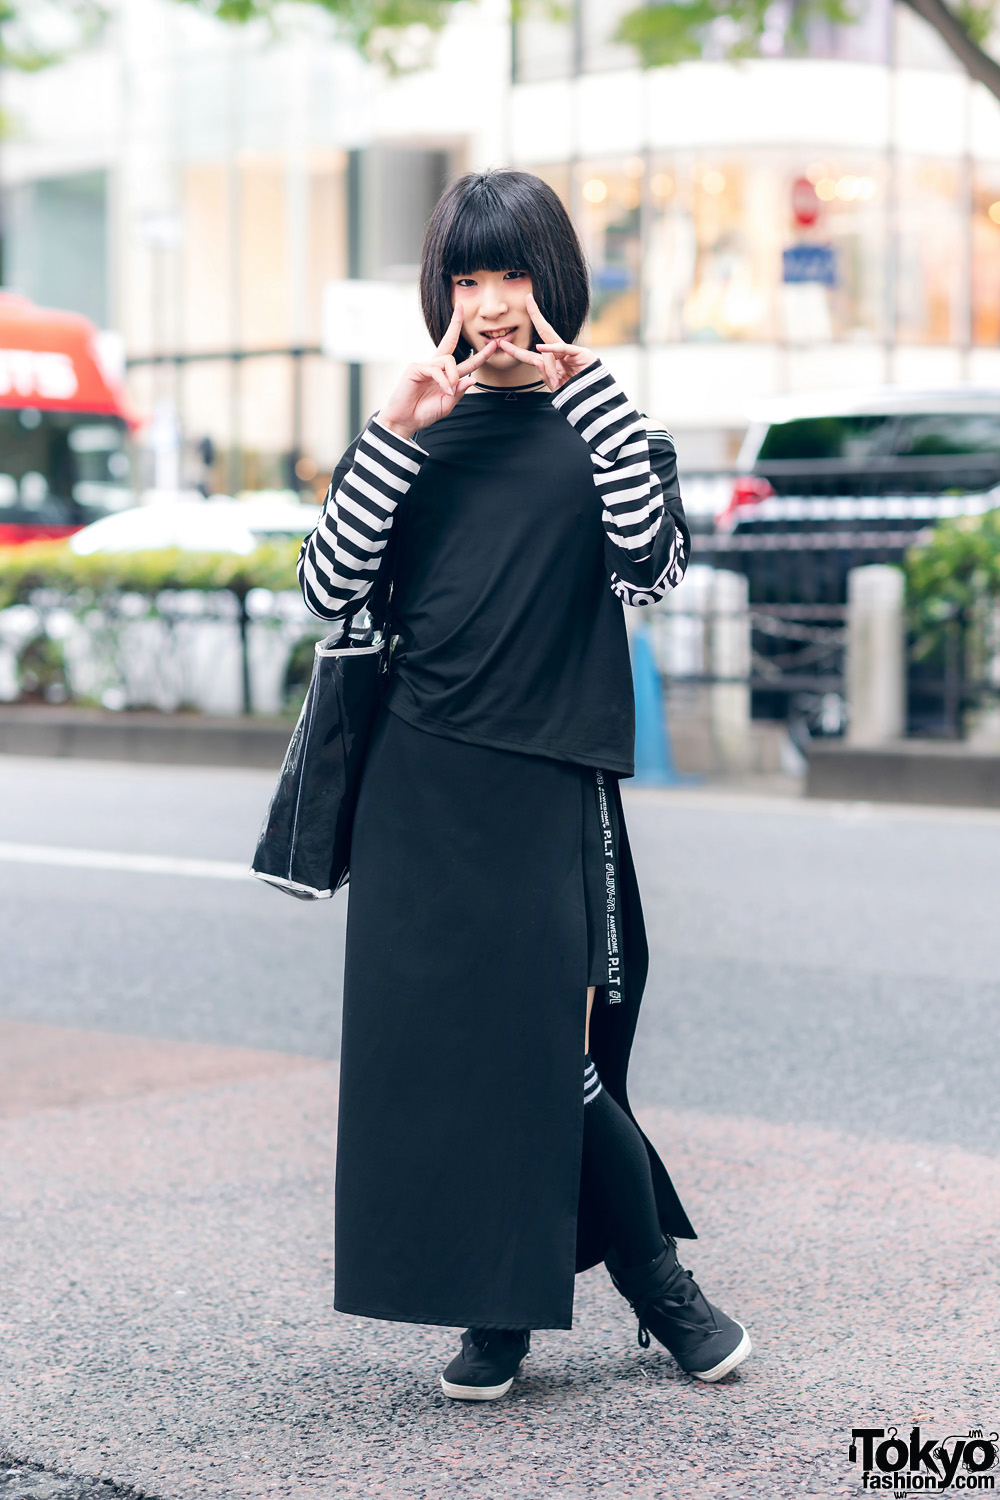 Black & White Harajuku Menhera Fashion w/ Menhera-Chan Badges, Listen Flavor, Cutout Top & High Top Sneakers